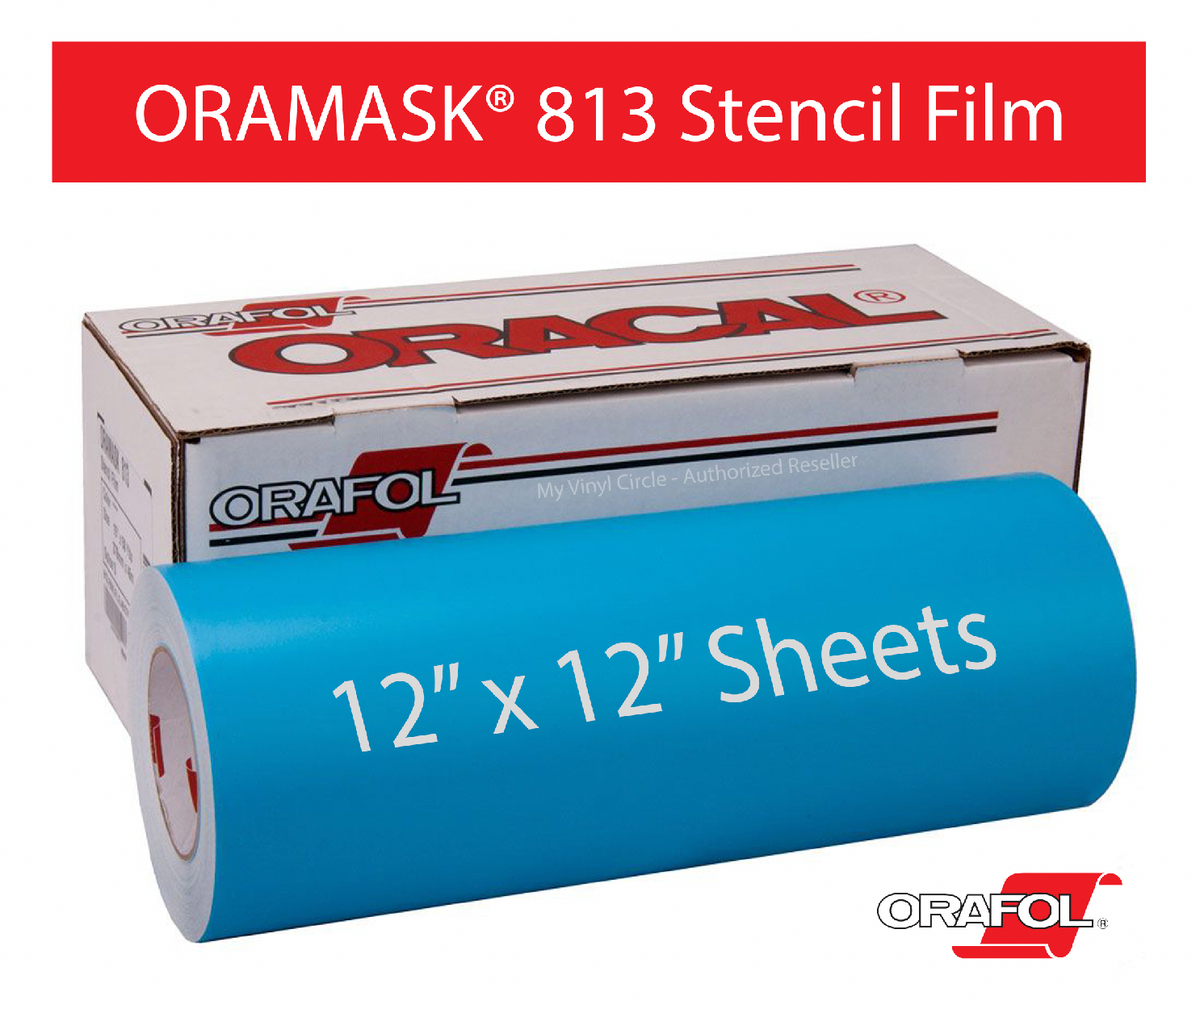 Oramask 813 (Oracal Stencil Vinyl)